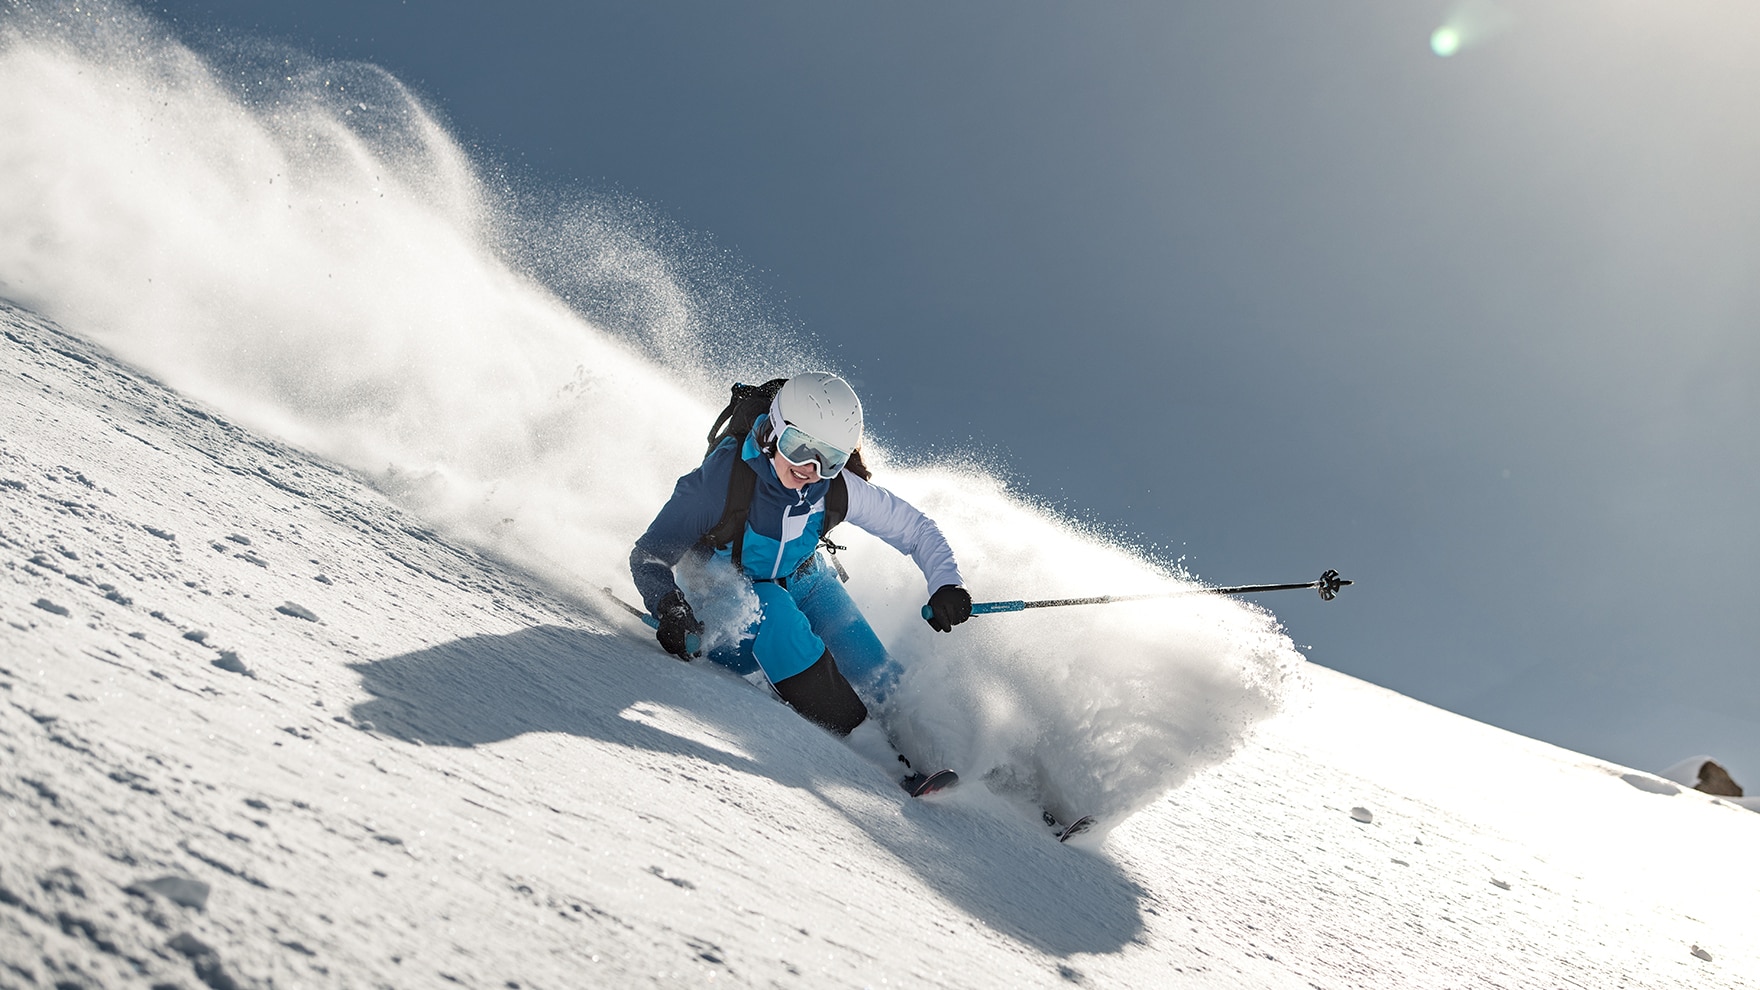 Skitouren-Handschuhe sollten robust, gut isoliert, atmungsaktiv sein.